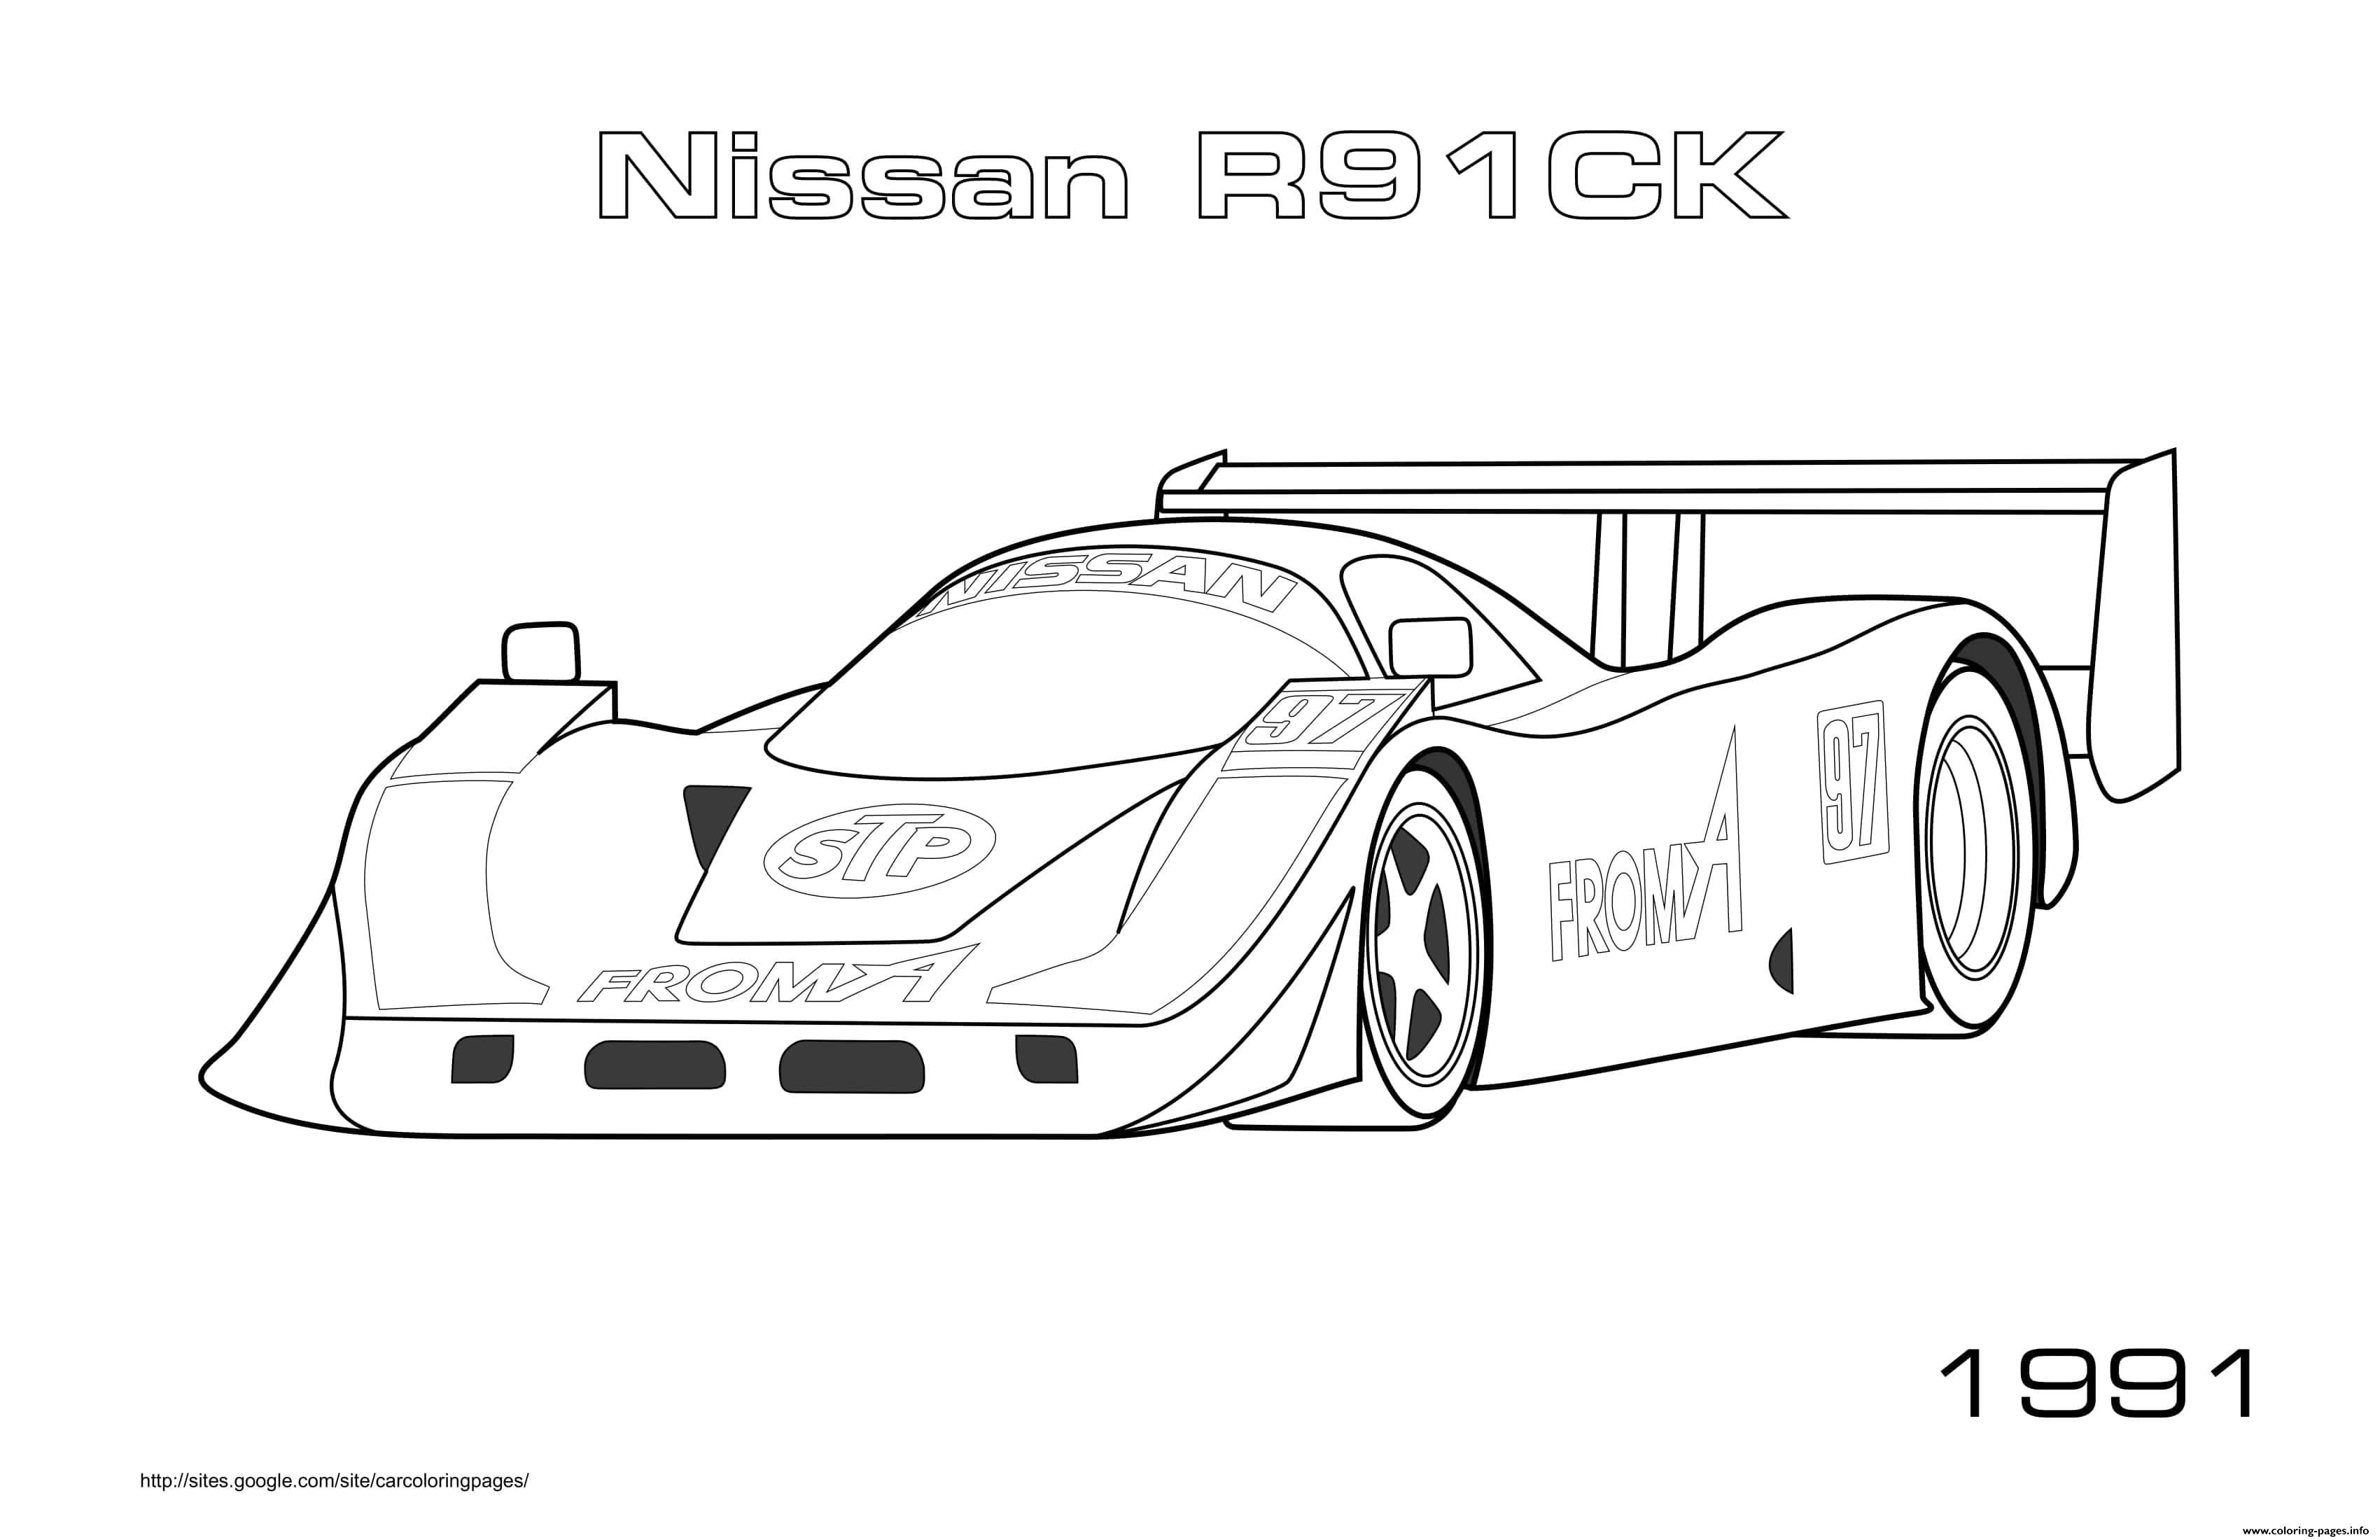 Nissan R91ck 1991 coloring